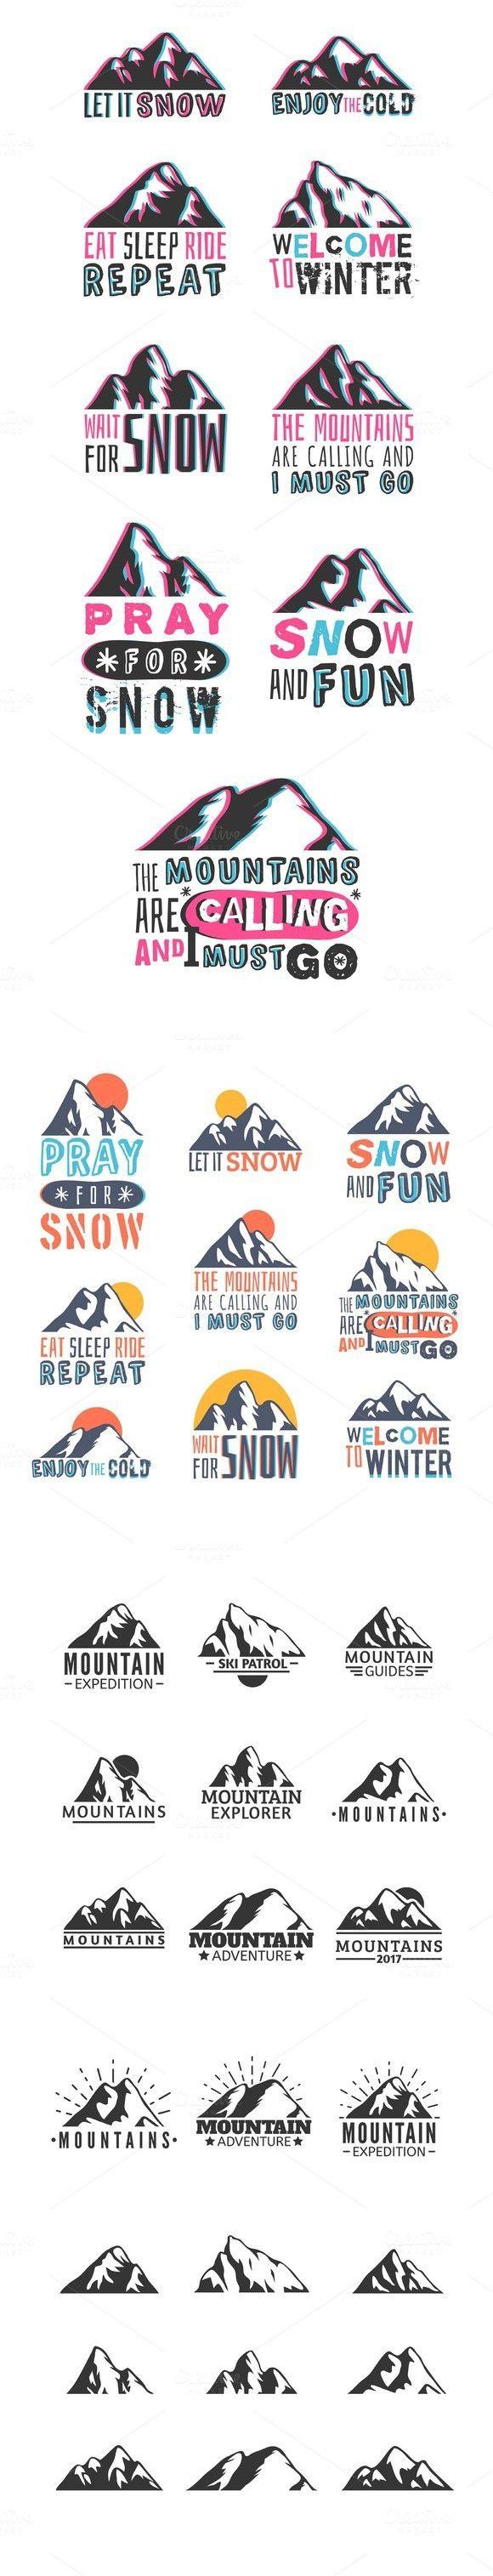 Hand Drawn Mountain Logo - Hand drawn mountains logo and badges | Pinterest | Mountain logos ...